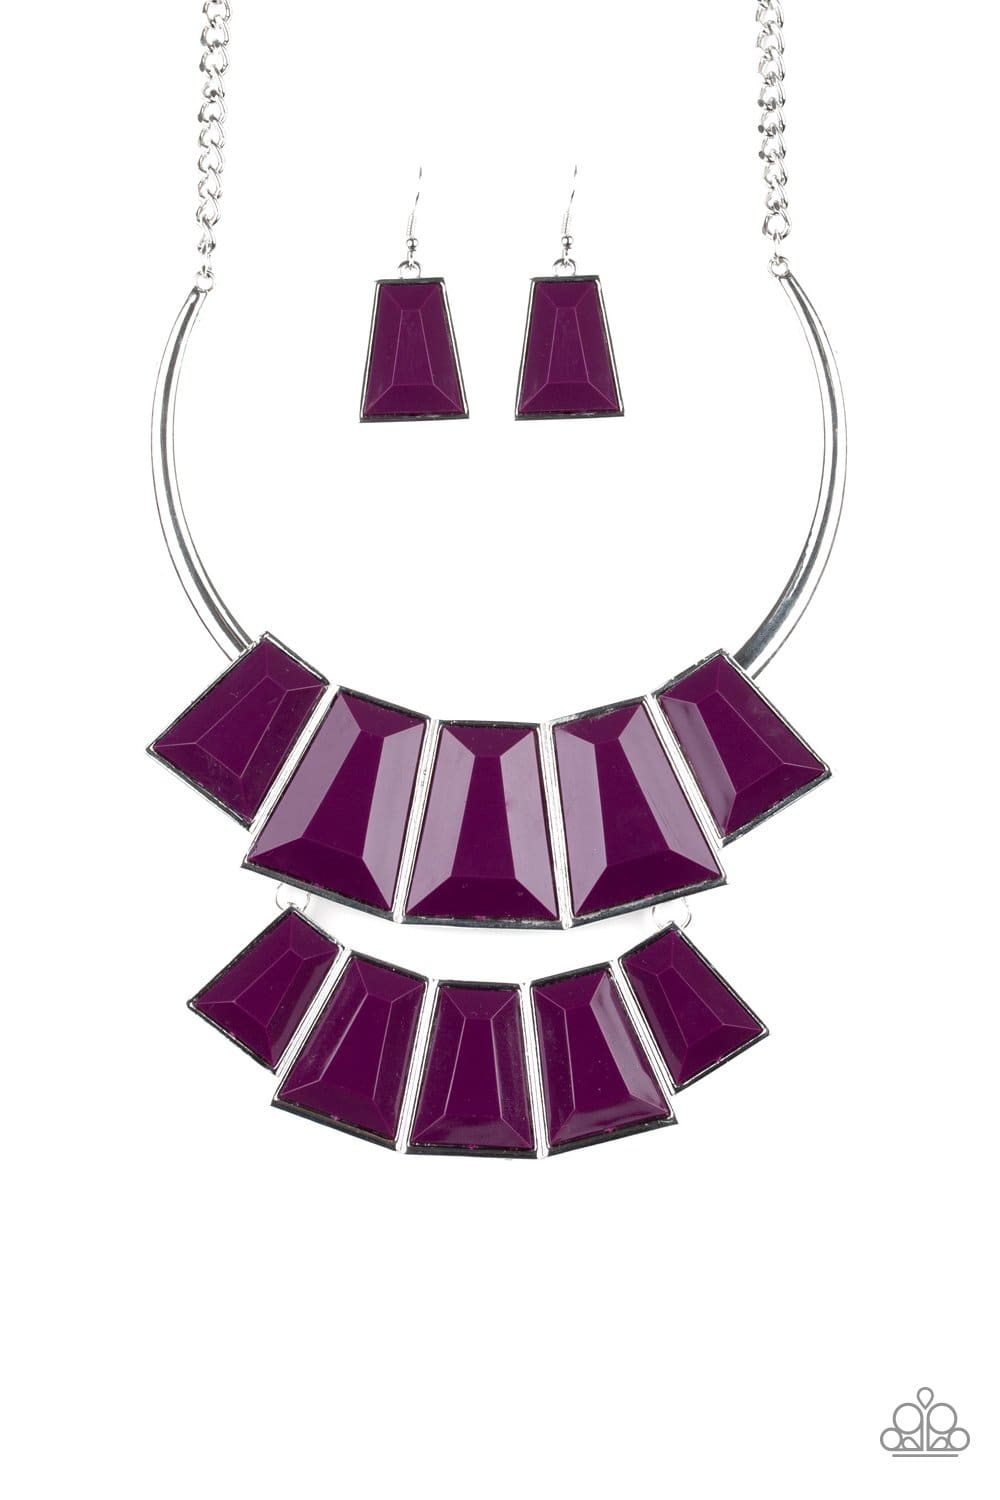 Lions, TIGRESS, and Bears - Purple Necklace - Paparazzi Accessories - GlaMarous Titi Jewels